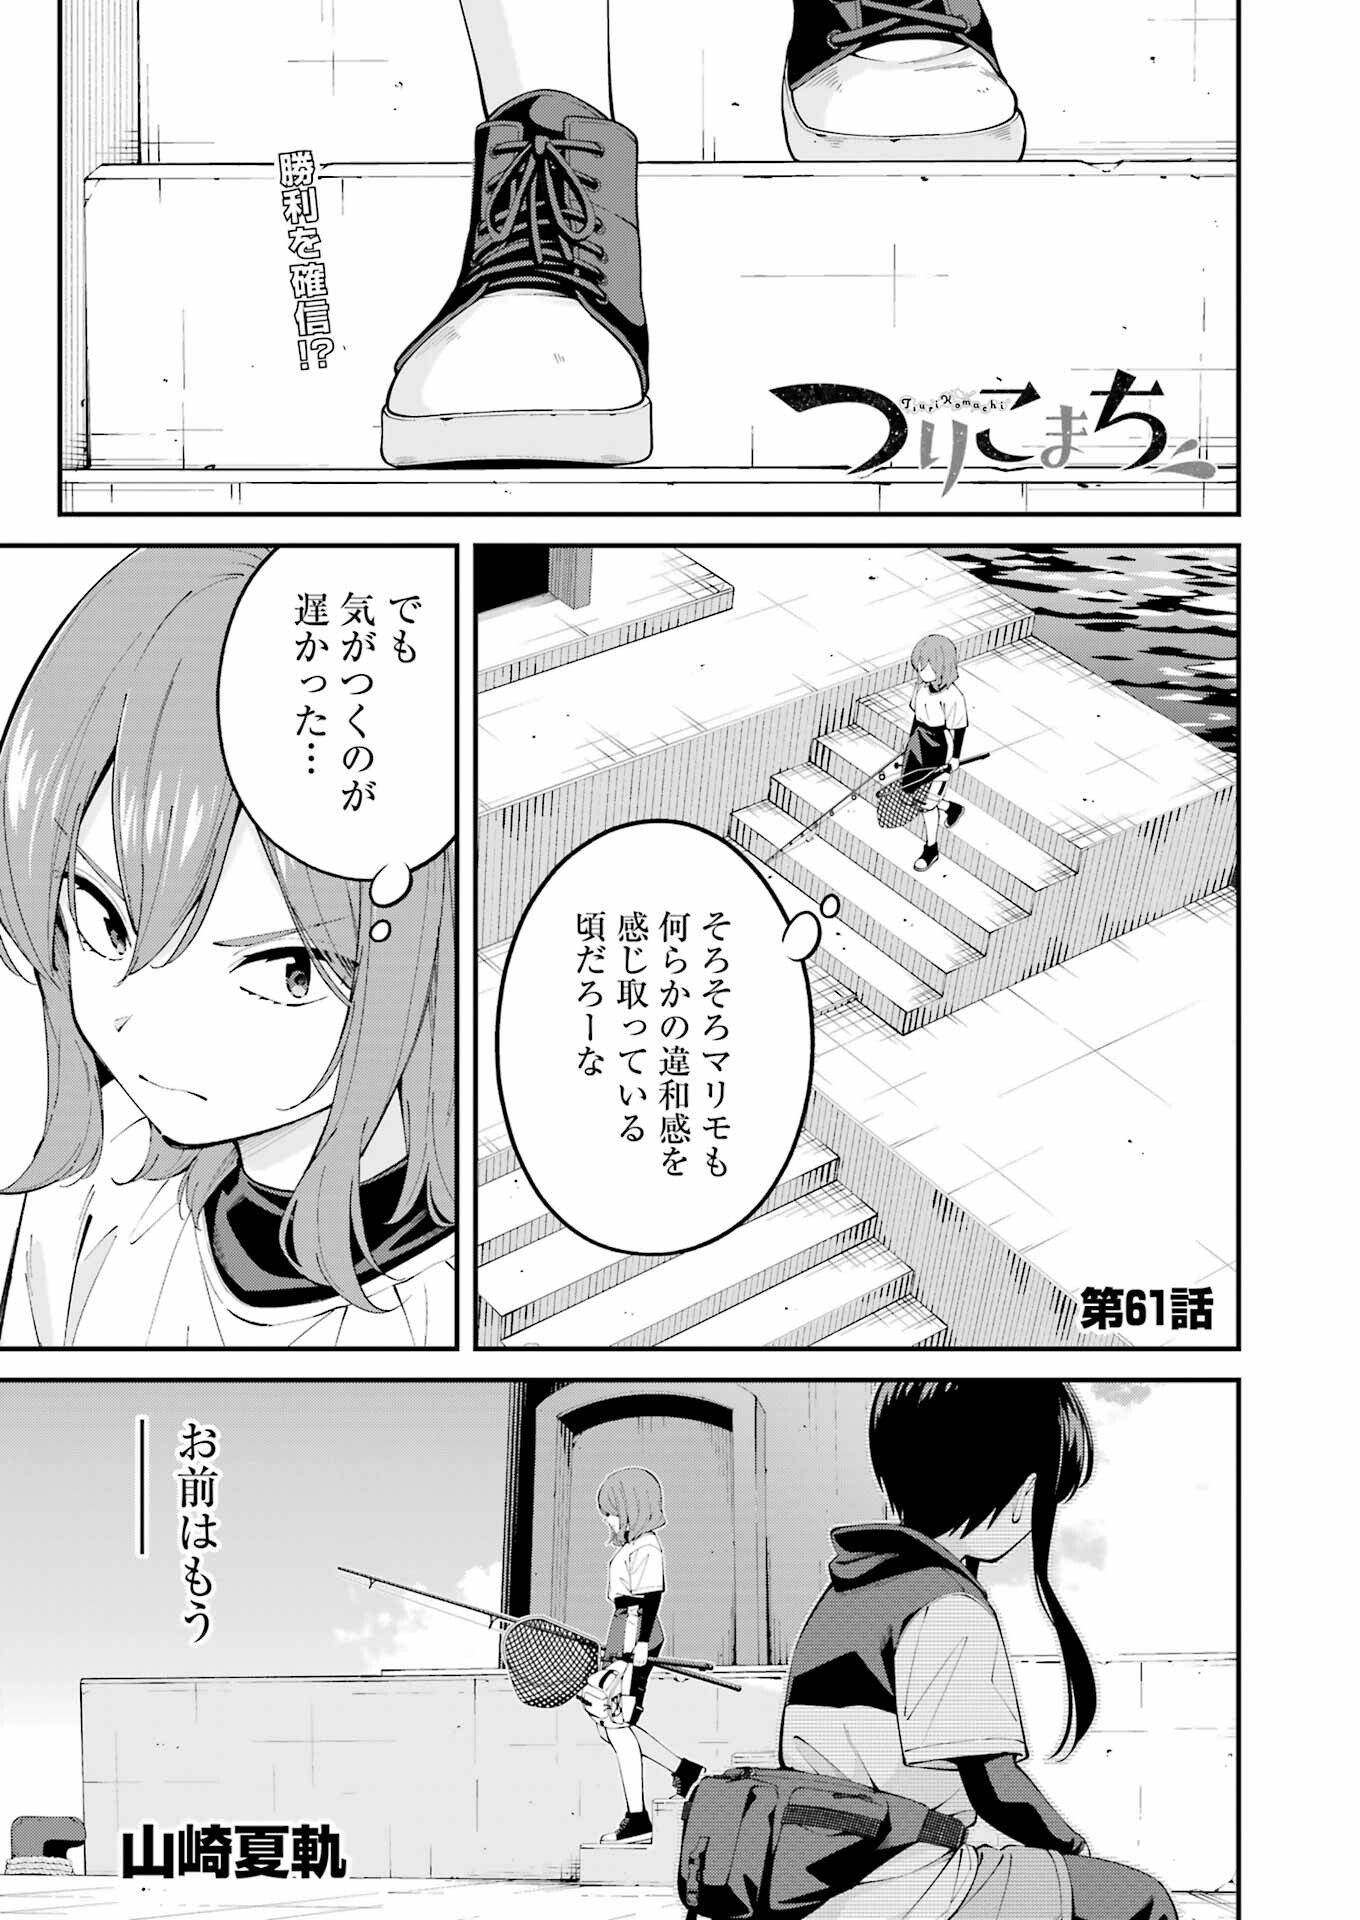 Tsuri Komachi - Chapter 61 - Page 1